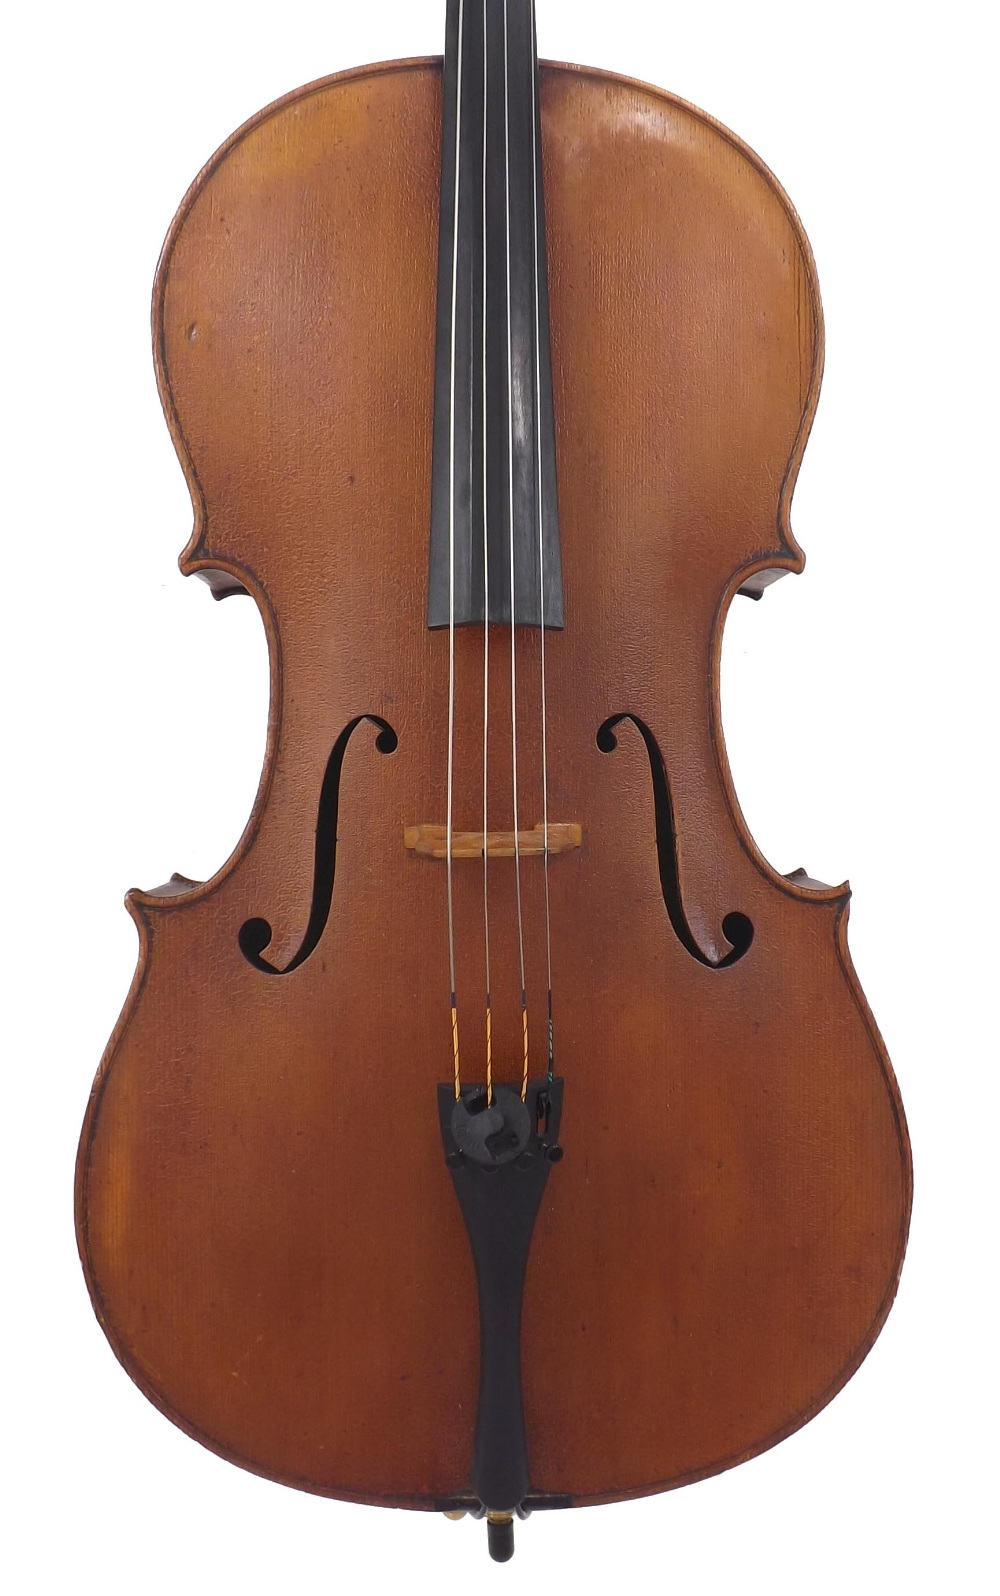 Good violoncello circa 1900, probably English, unlabelled, the two piece back of fine/medium curl